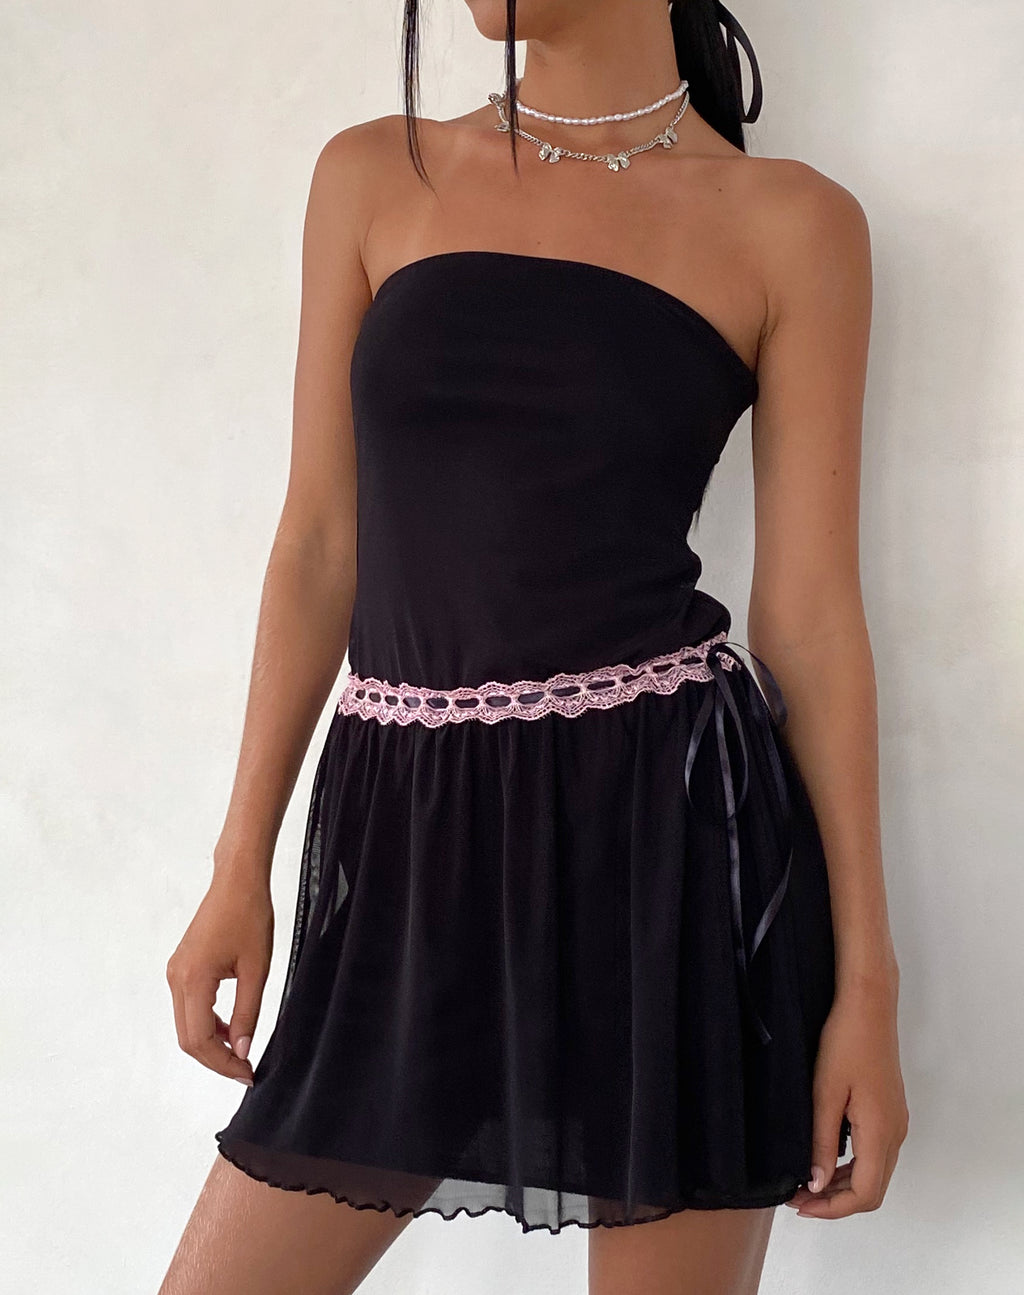 Cleodora Bandeau Mesh Mini Dress in Black with Pink Waistband